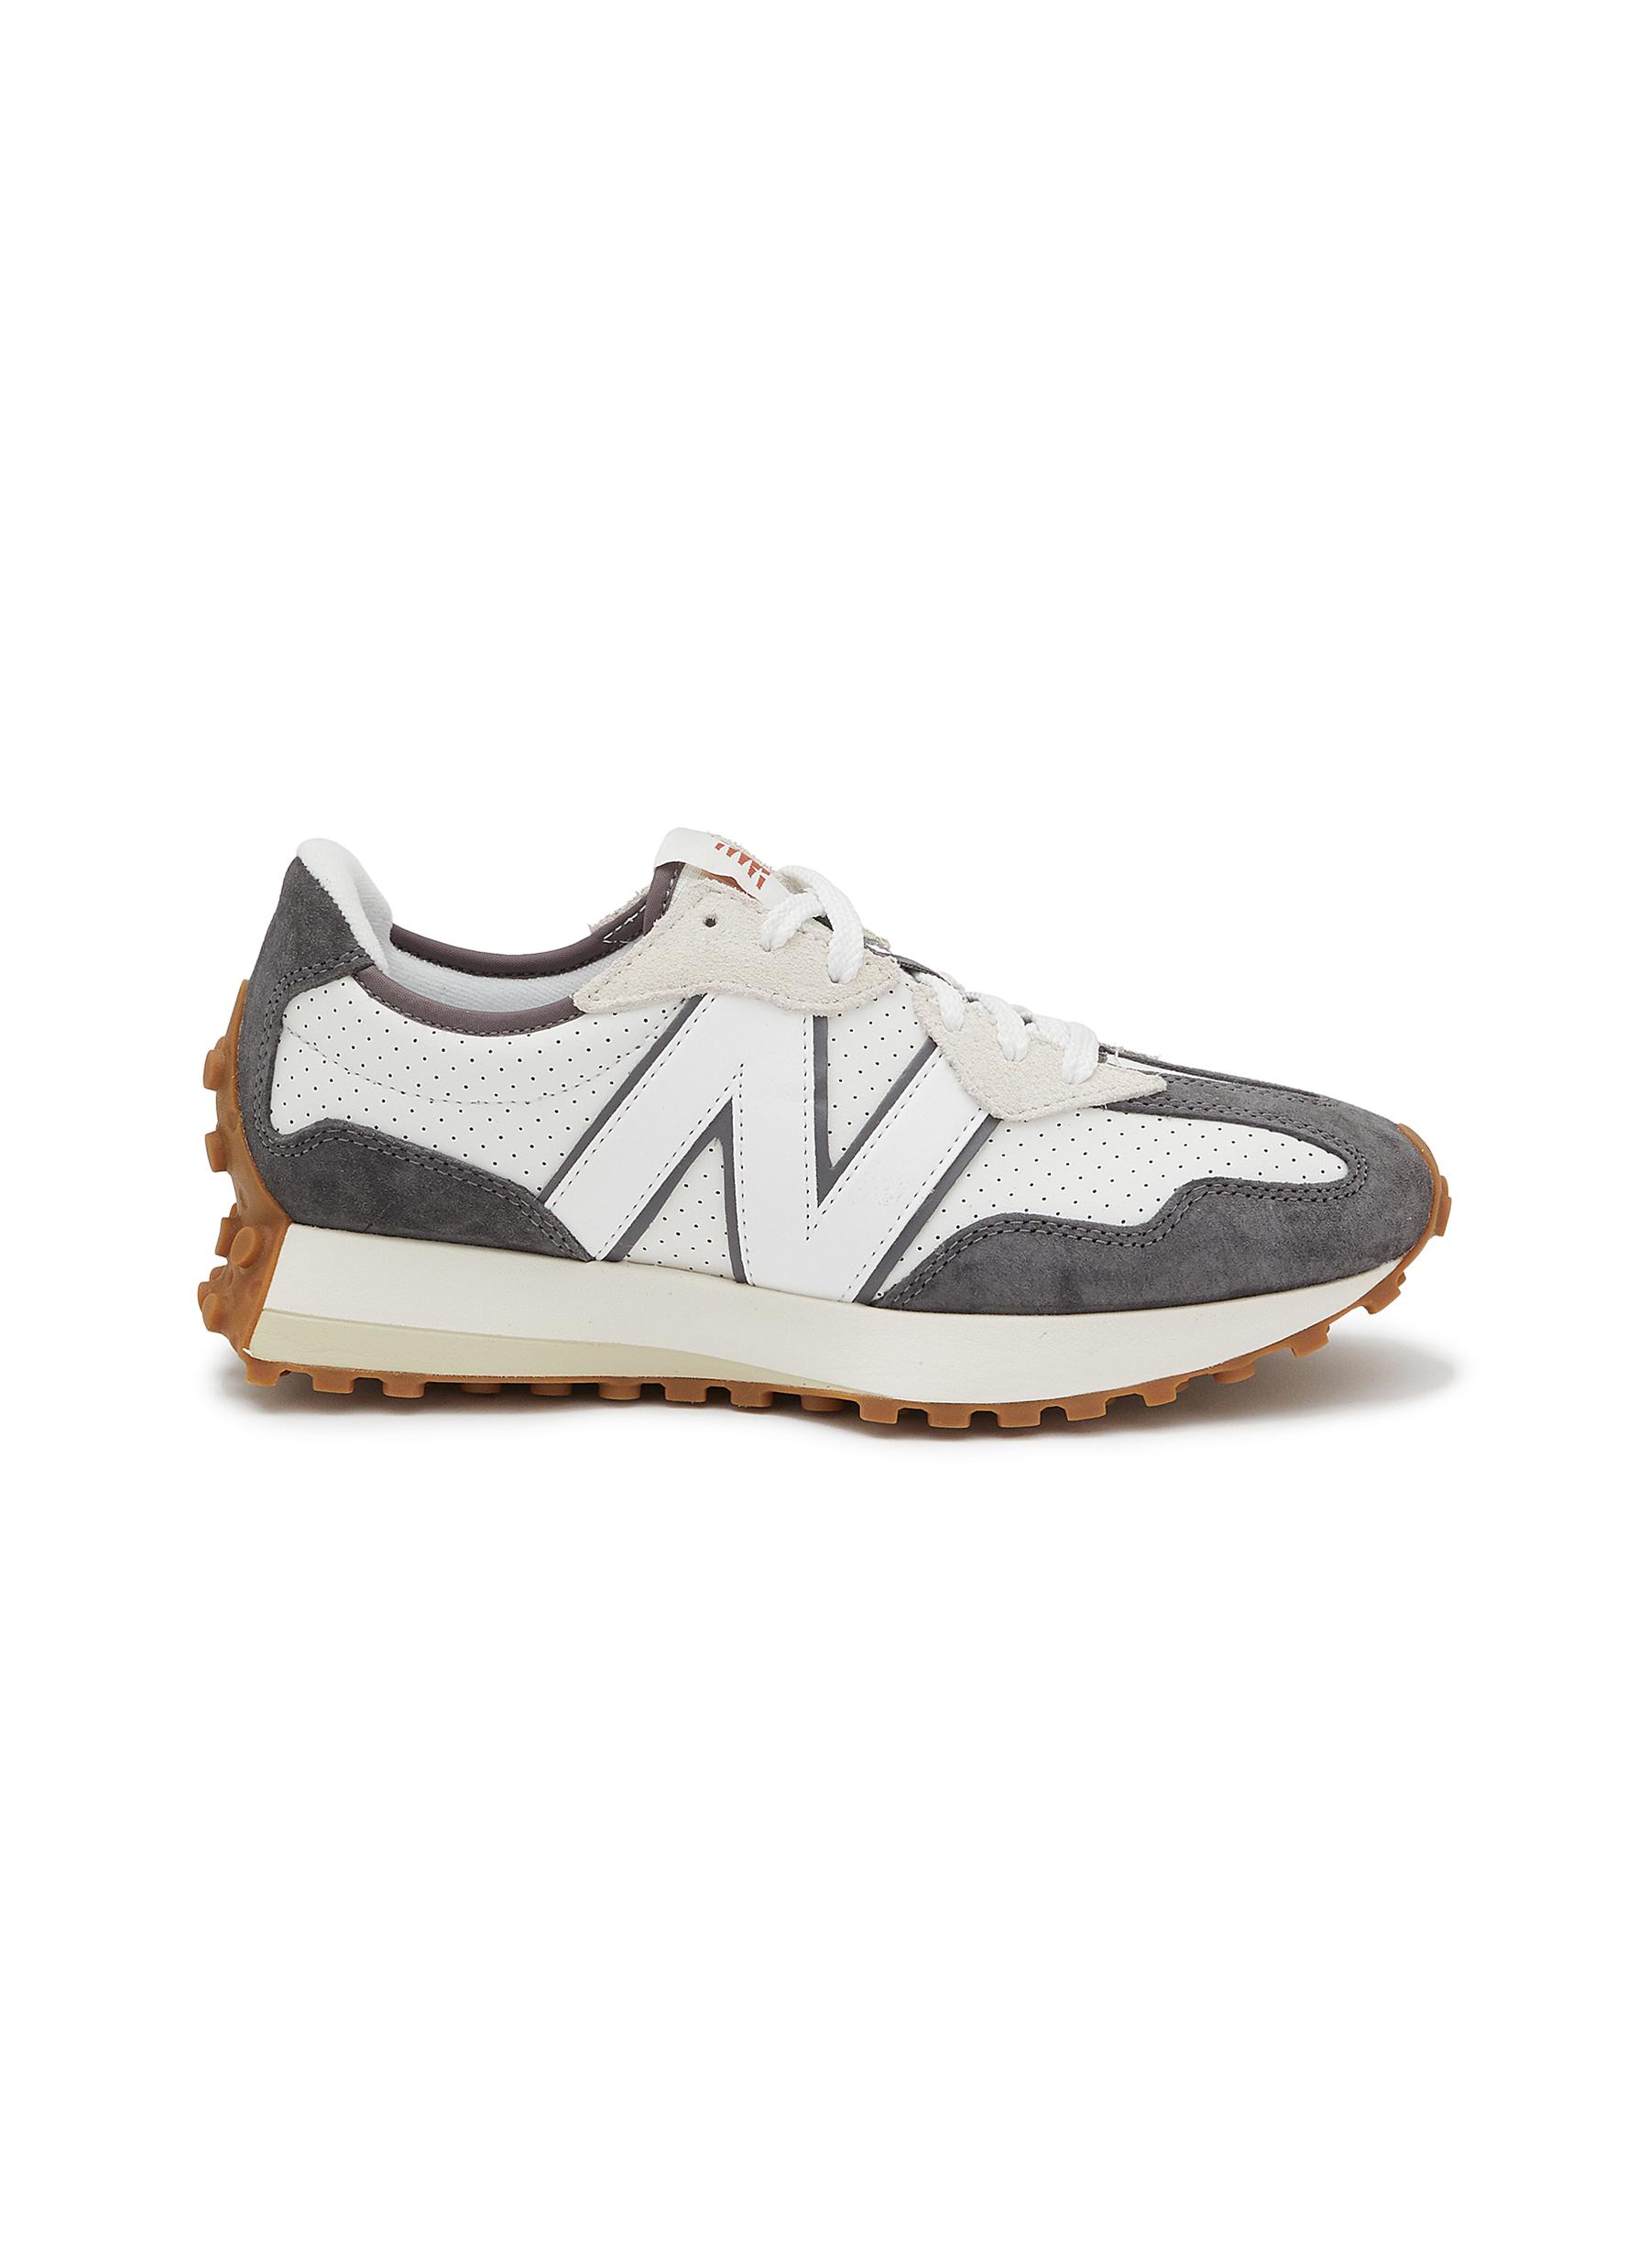 NEW BALANCE 550 leather sneakers - Harvey Nichols